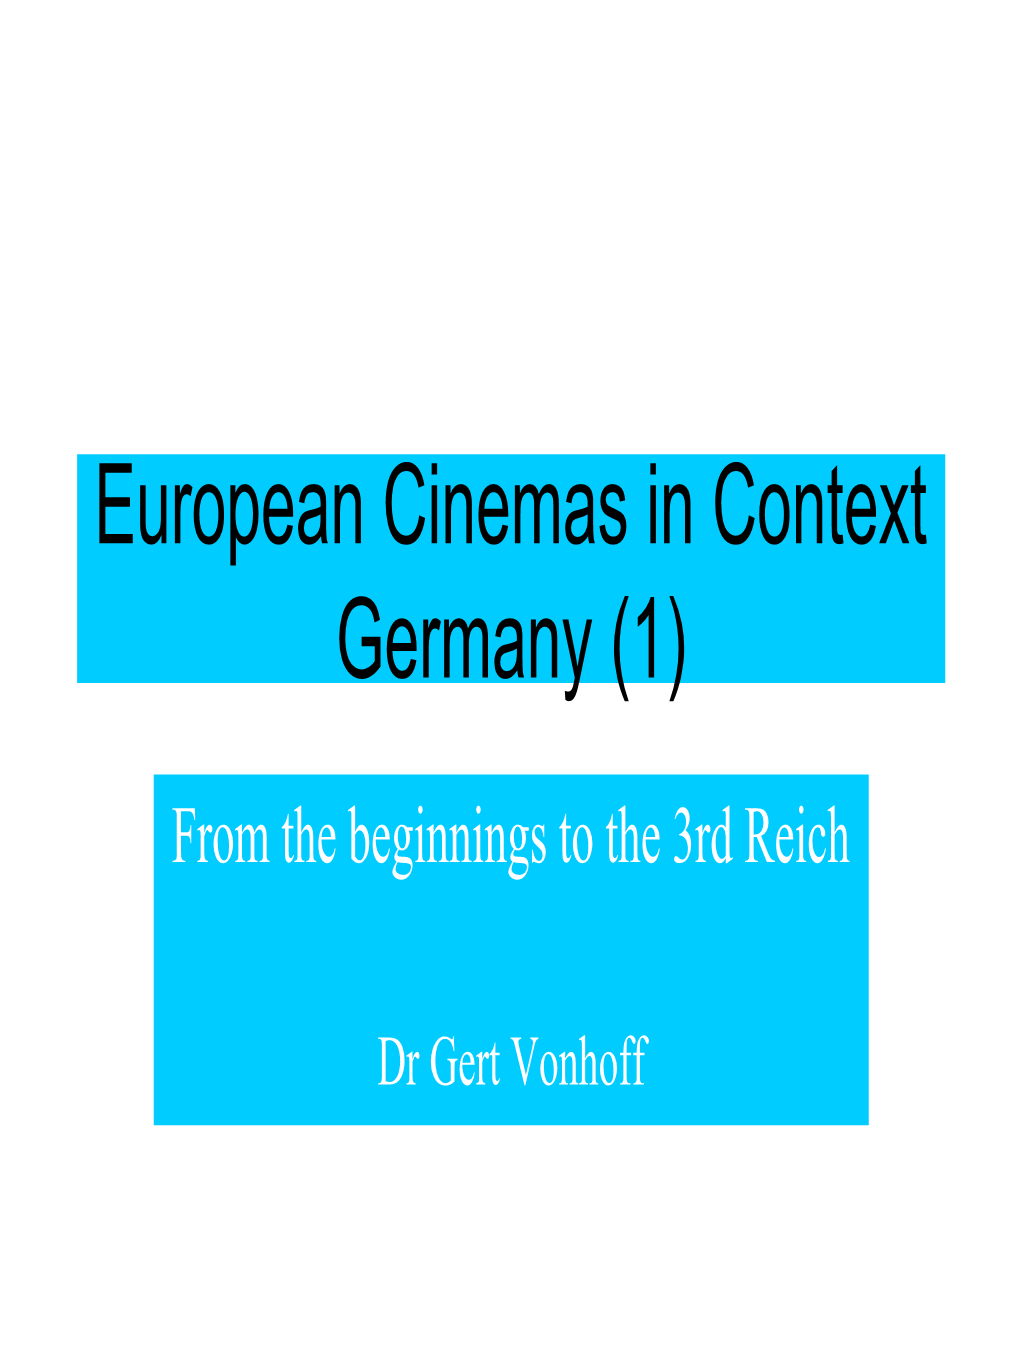 European Cinemas in Context Germany (1)